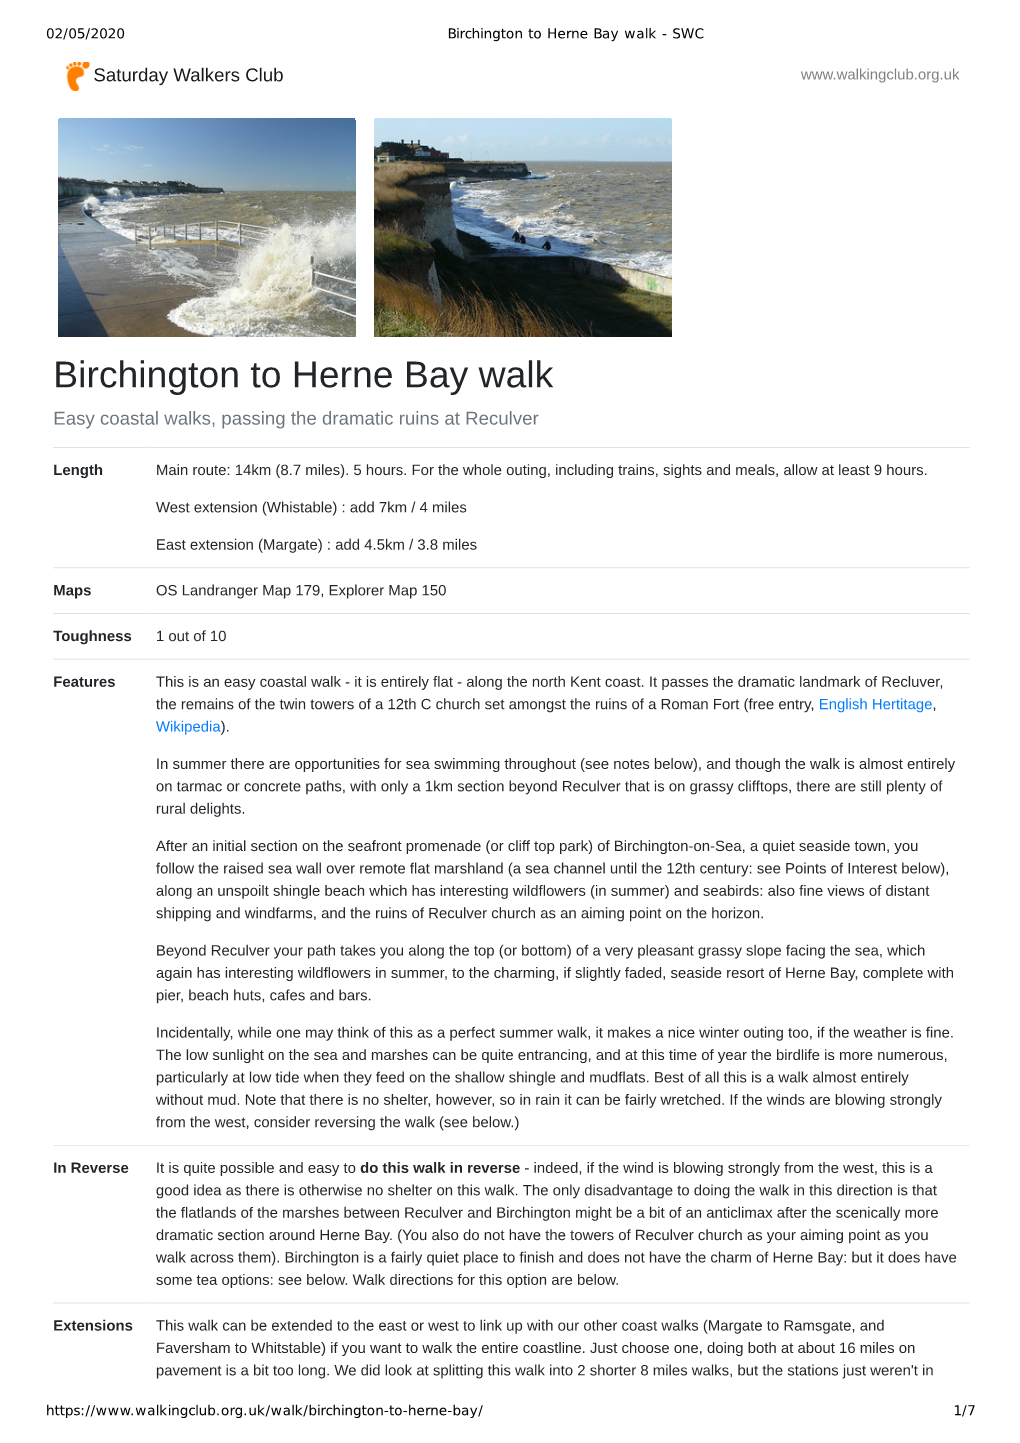 Birchington to Herne Bay Walk - SWC